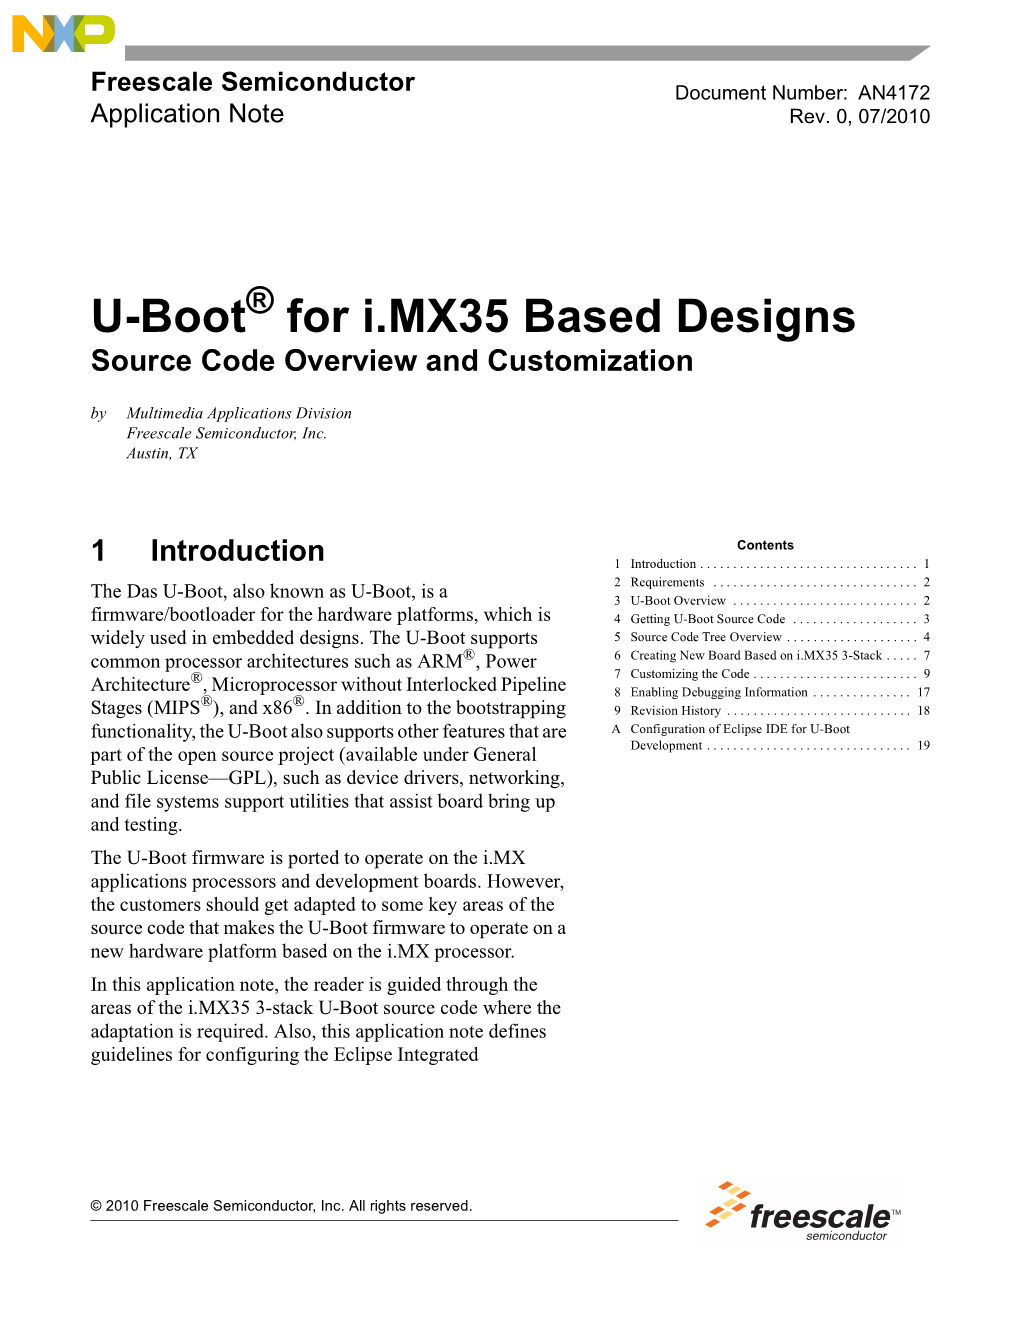 U-Boot for I.MX35 Based Designs